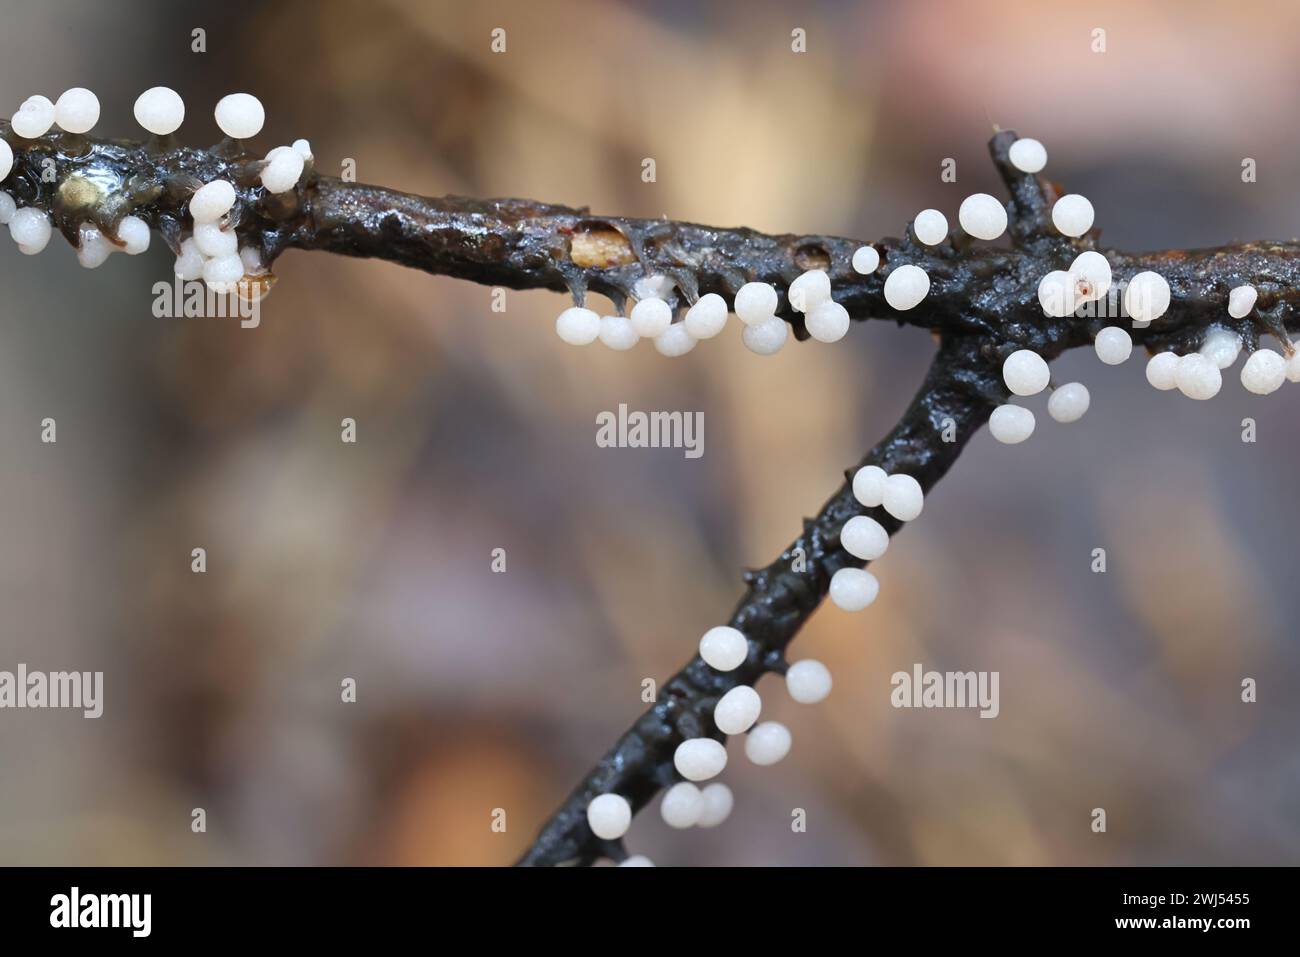 Didymium melanospermum, slime mold from Finland, no common English name Stock Photo